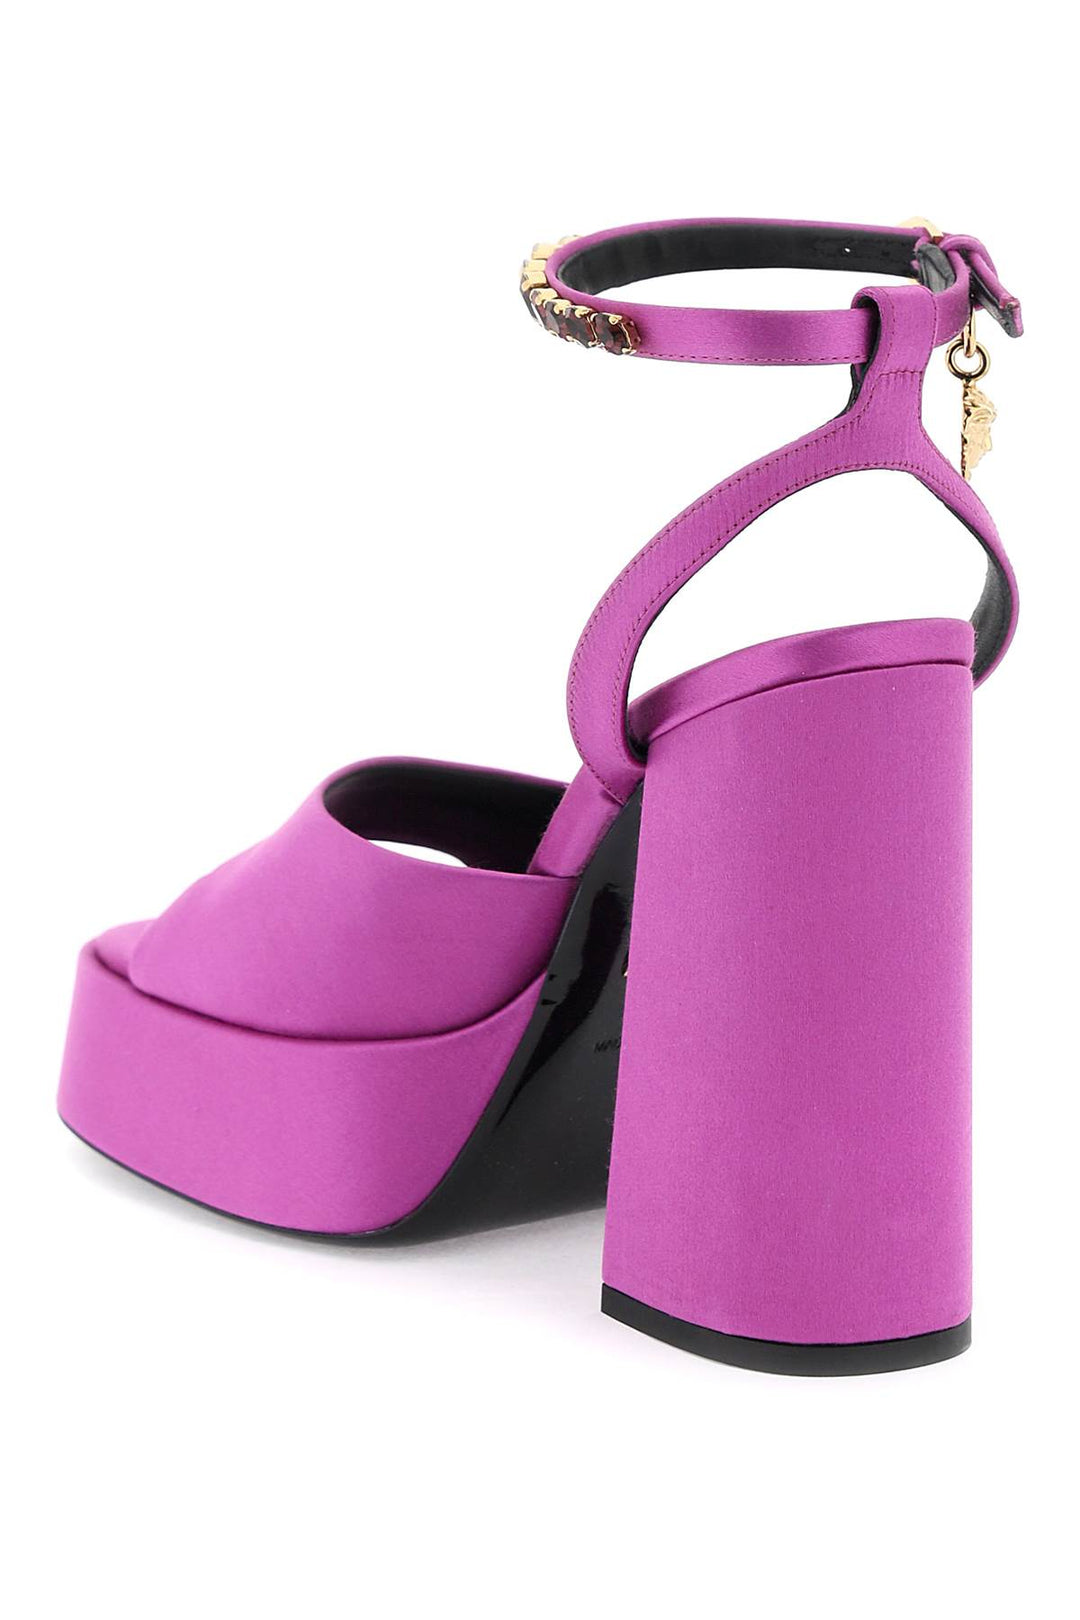 Versace 'Aevitas' Sandals   Viola